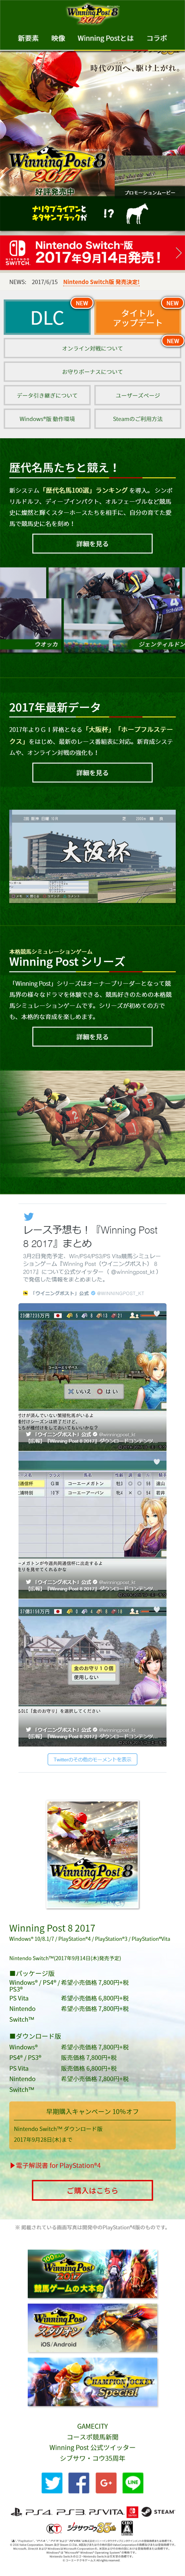 Winning Post8_sp_1